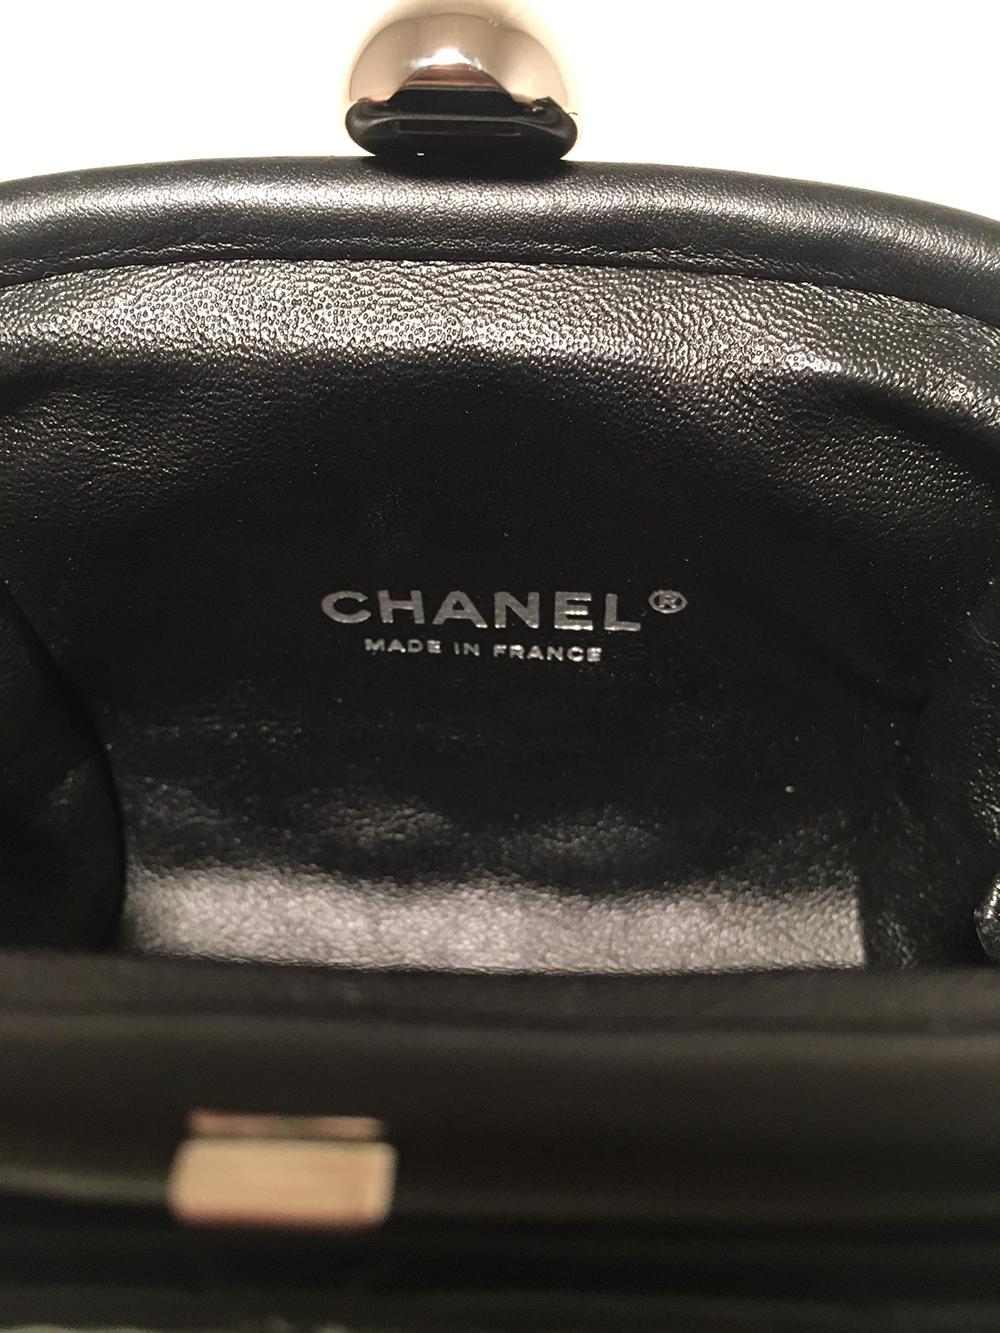 Chanel Mini Black Patent Leather Kiss lock Shoulder Bag 1